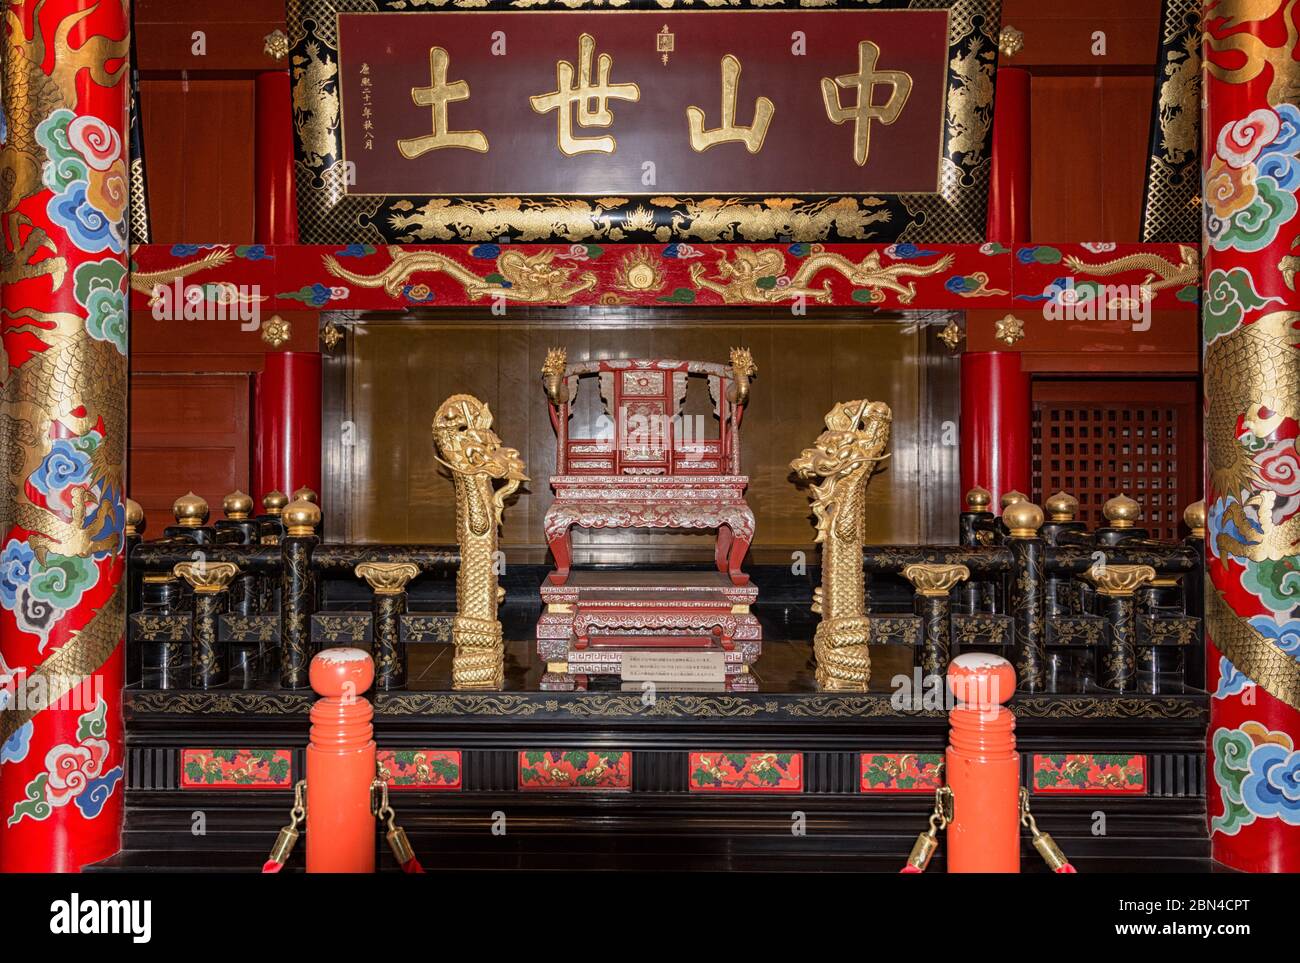 Naha, Okinawa prefecture / Japan - February 27, 2018: Throne of the old Ryukyu kings of Okinawa in the Shuri castle, Naha, capital of Okinawa prefectu Stock Photo